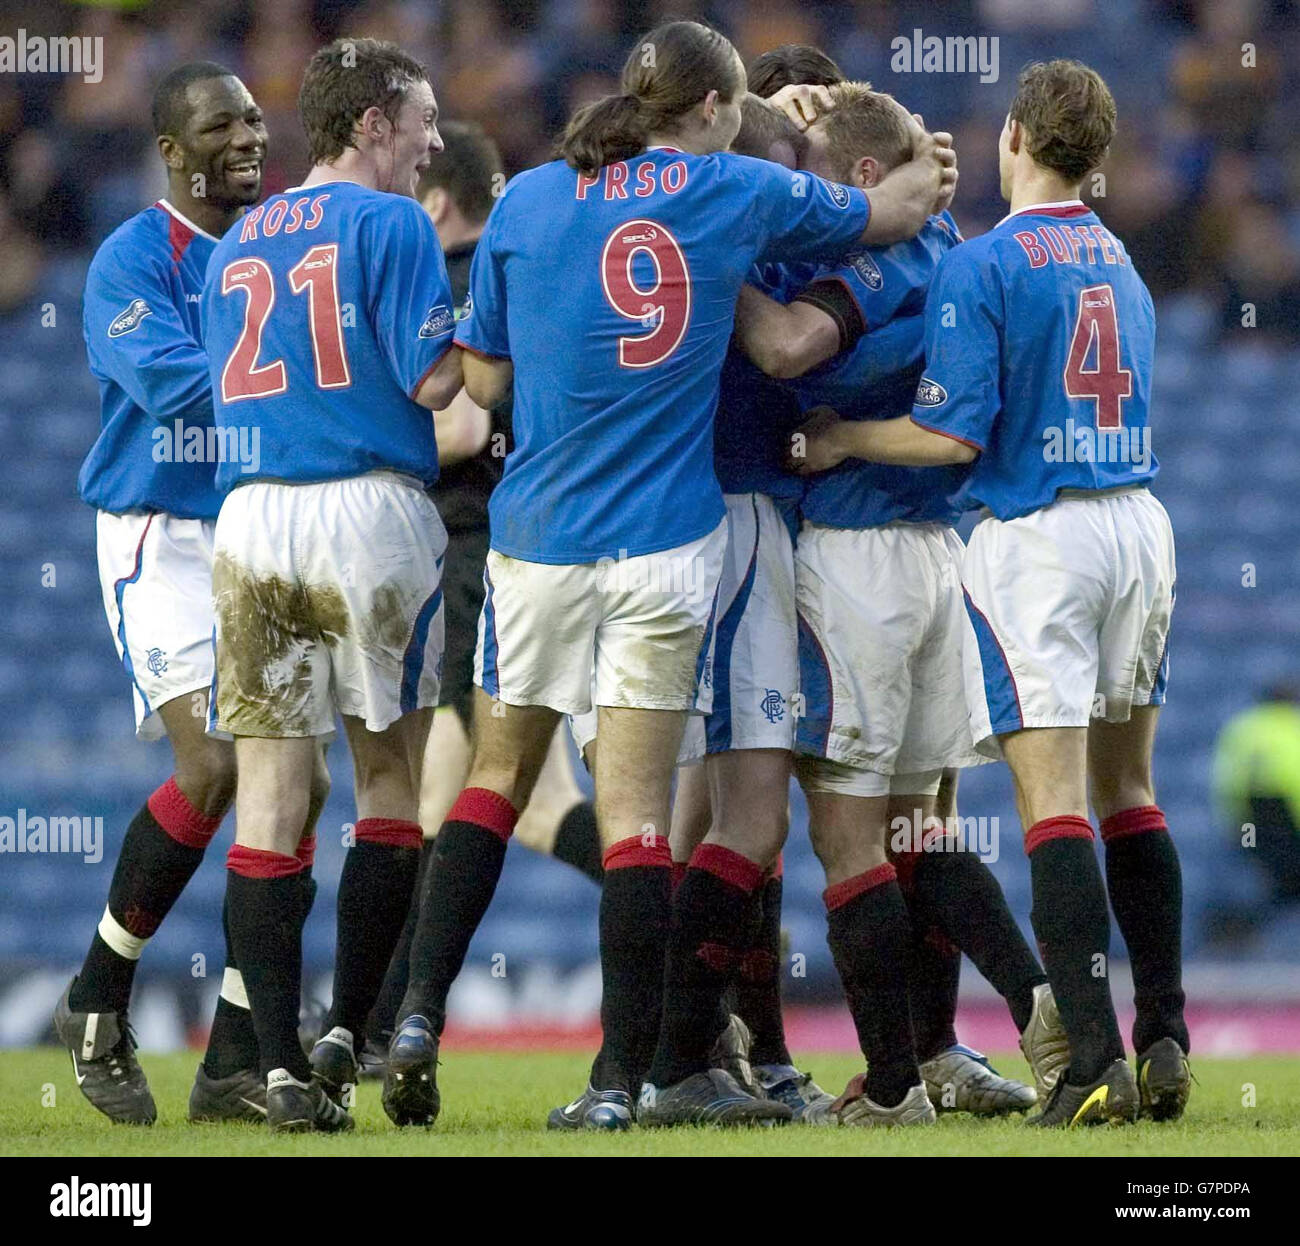 Soccer - Bank Of Scotland Premiere League - Rangers v Livingston - Ibrox stadium. Rangers players celebrate Ricksen's goal Stock Photo